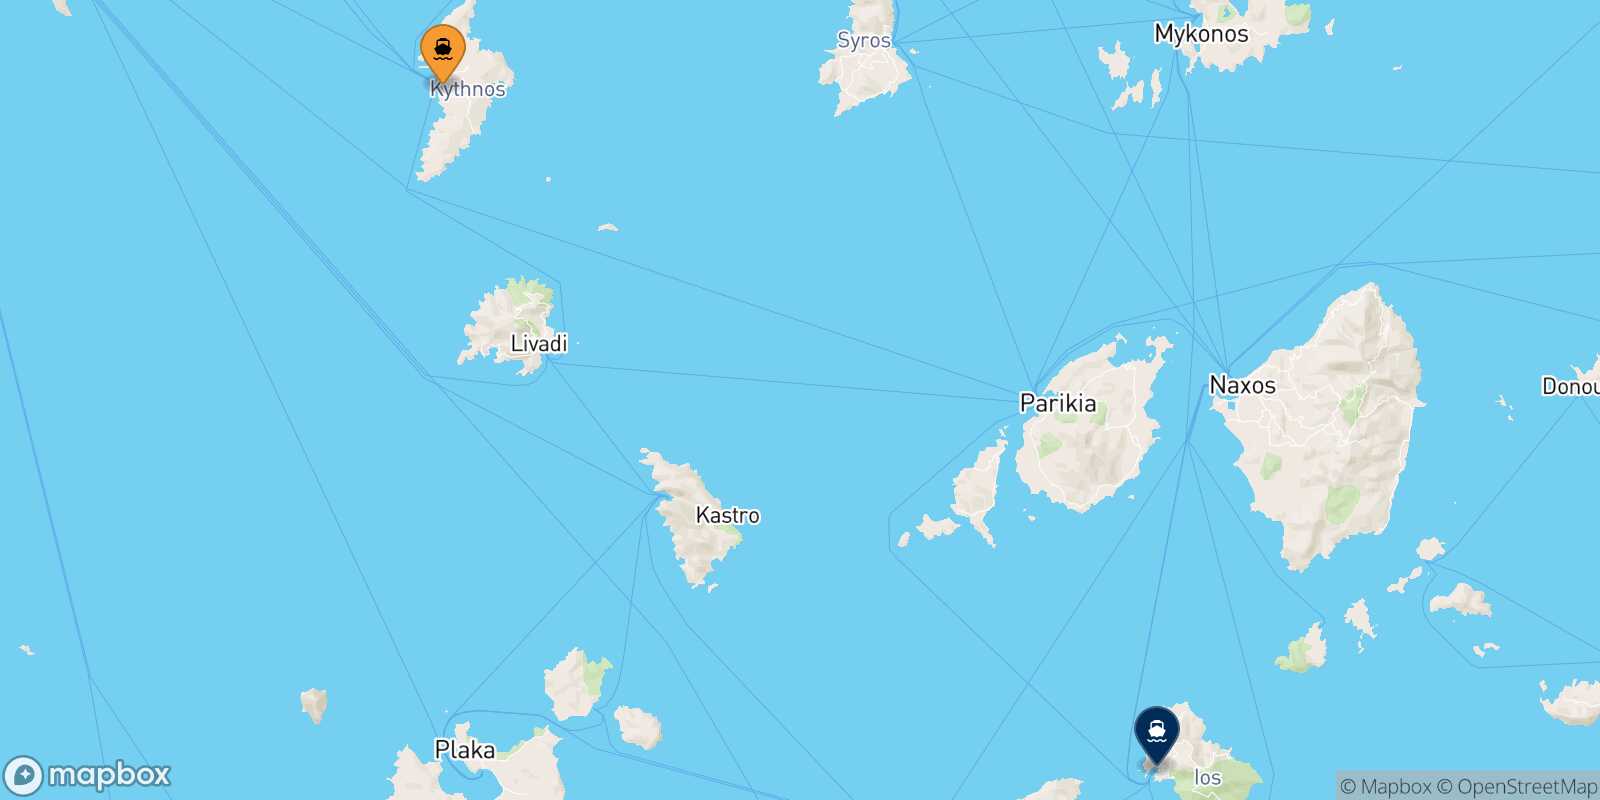 Kythnos Ios route map